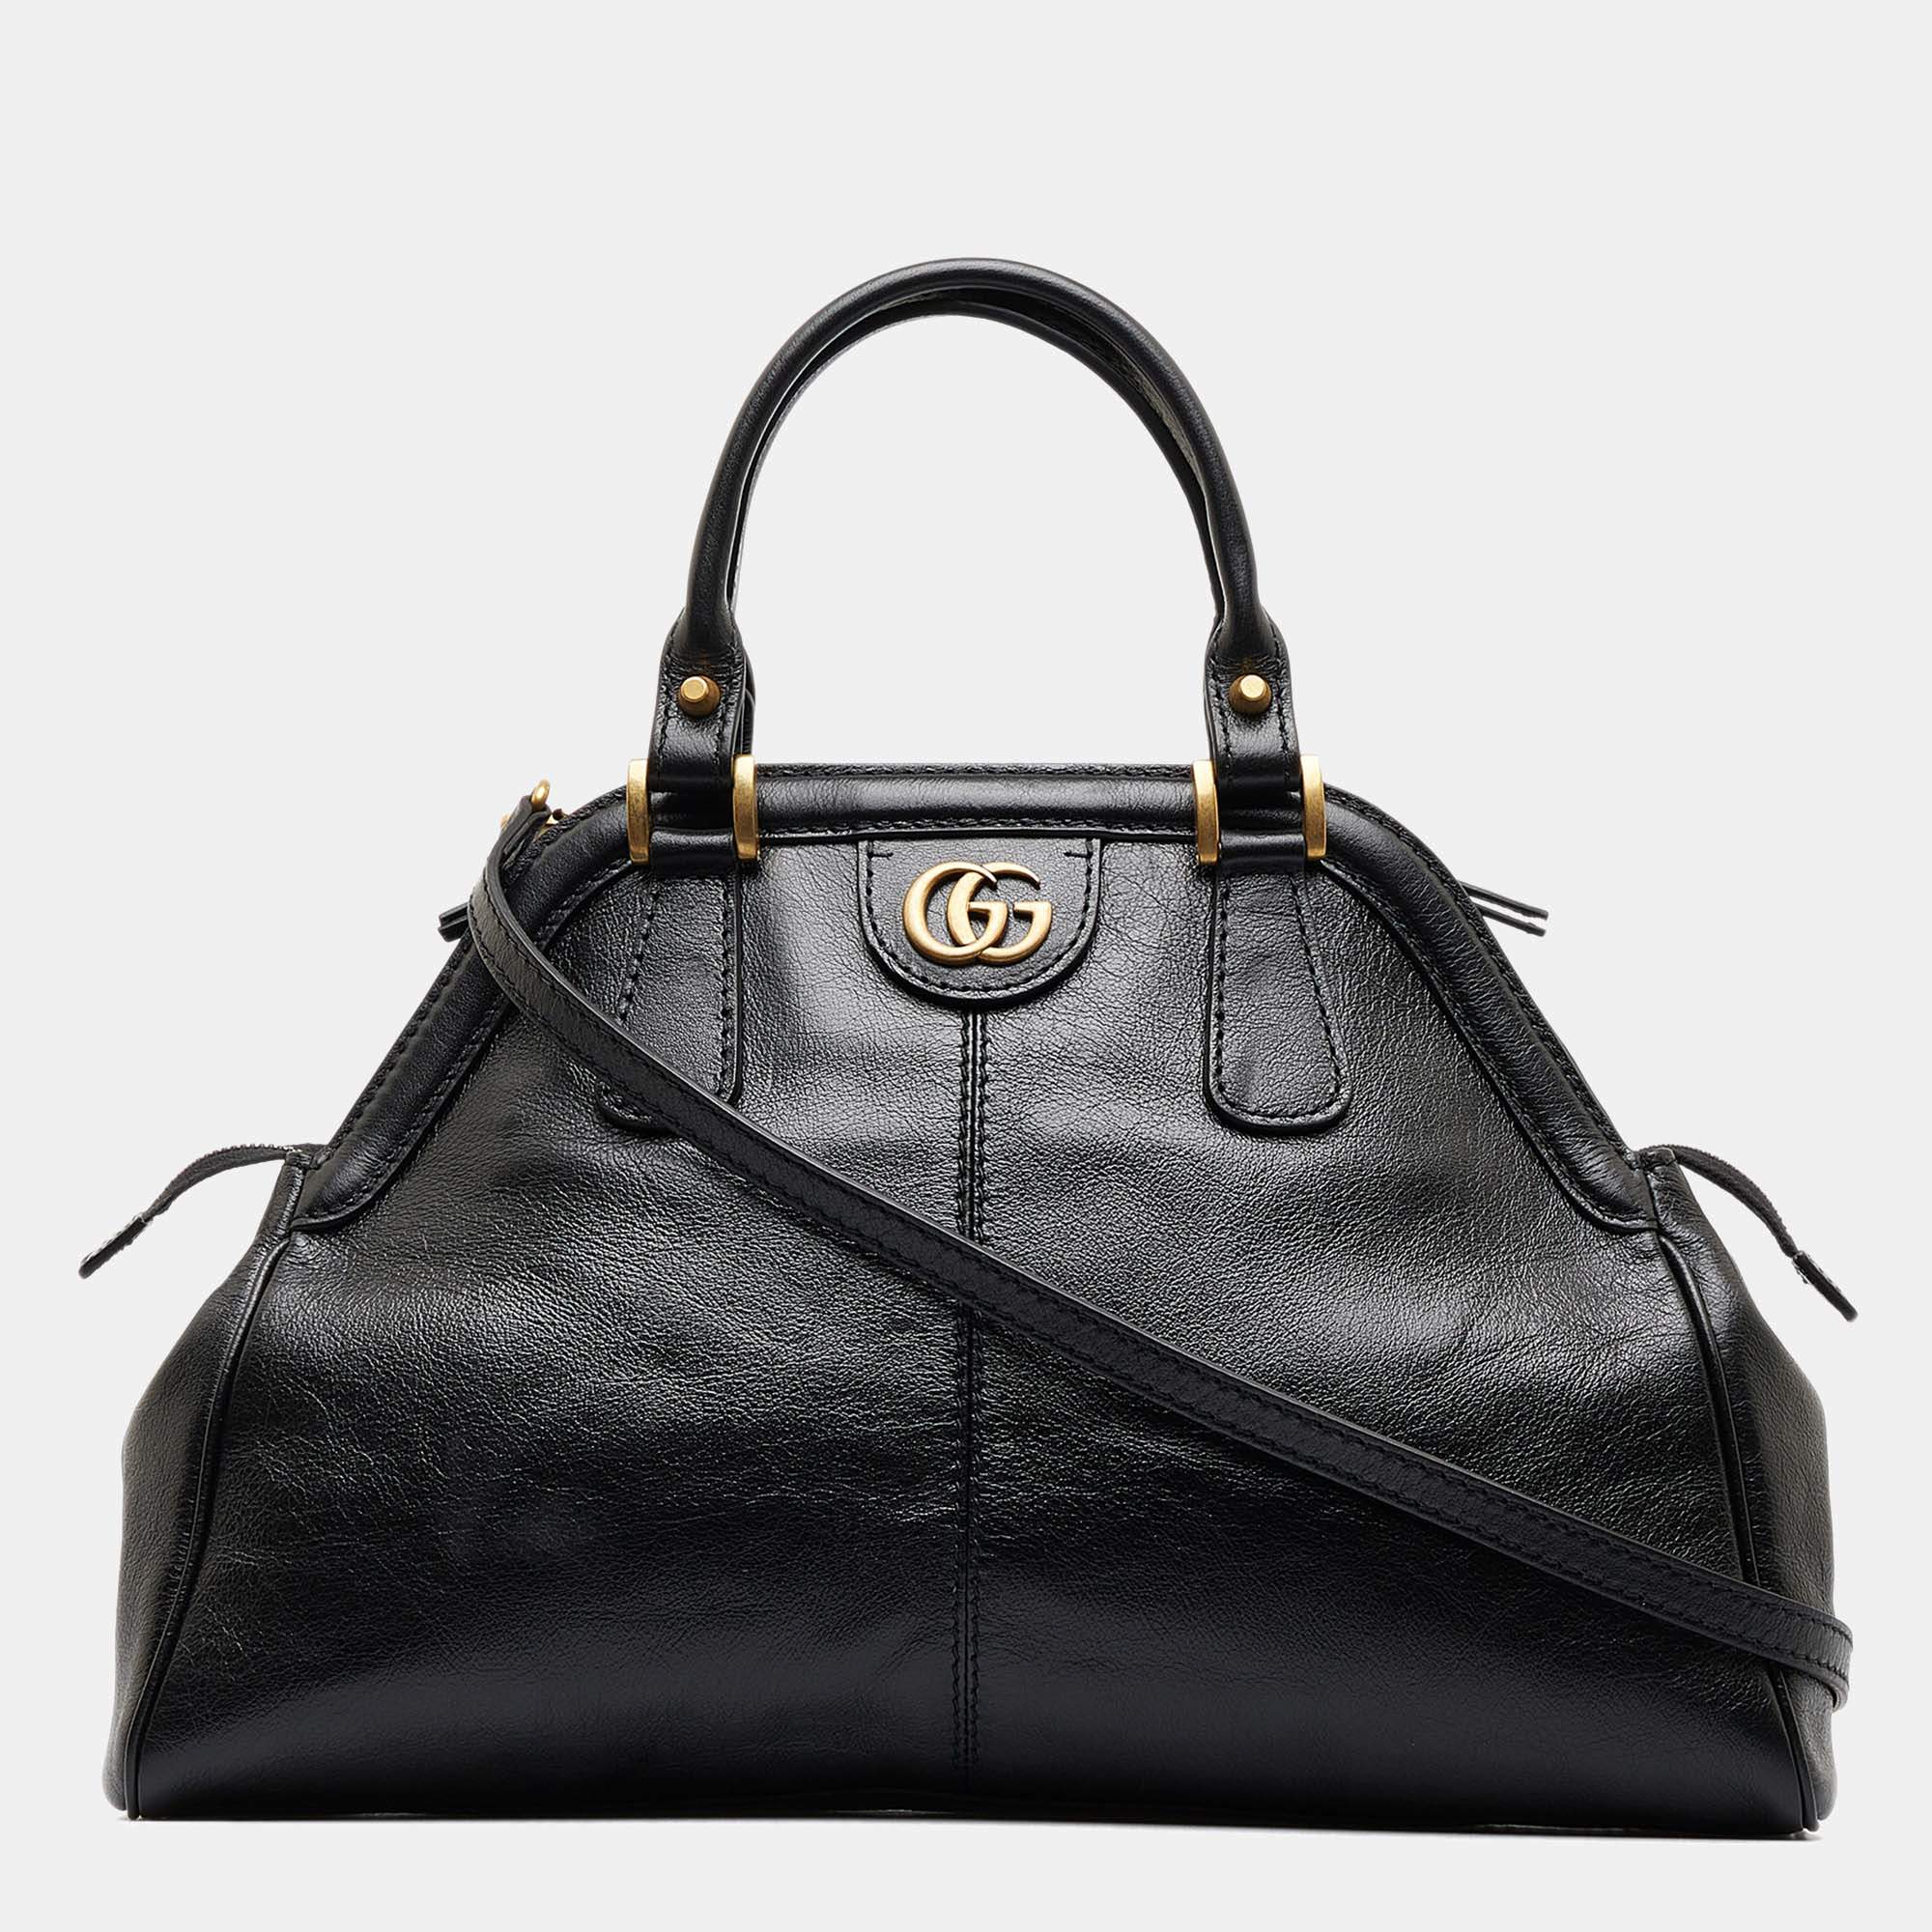 Gucci marmont top Handle mini bag white  Black gucci bag, Gucci bag, Fancy  bags